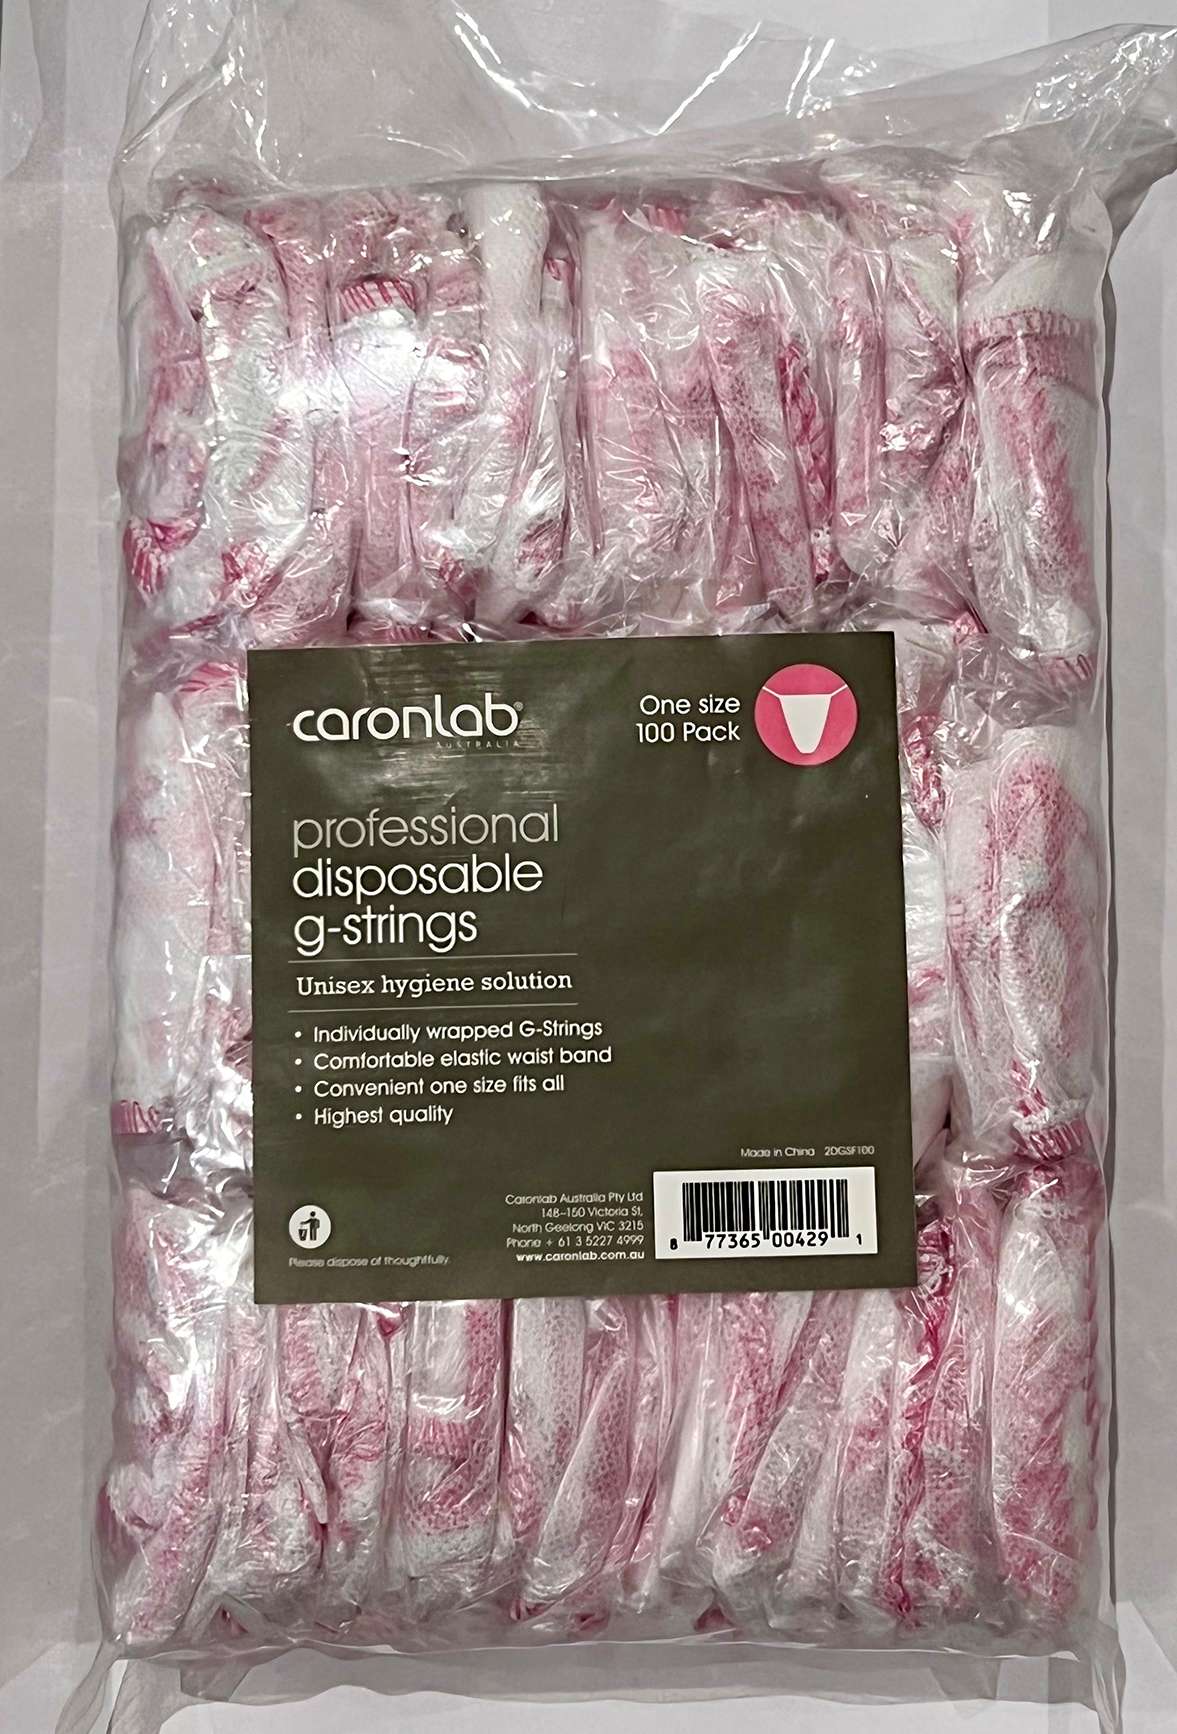 Caronlab Disposable G-Strings 100 pack